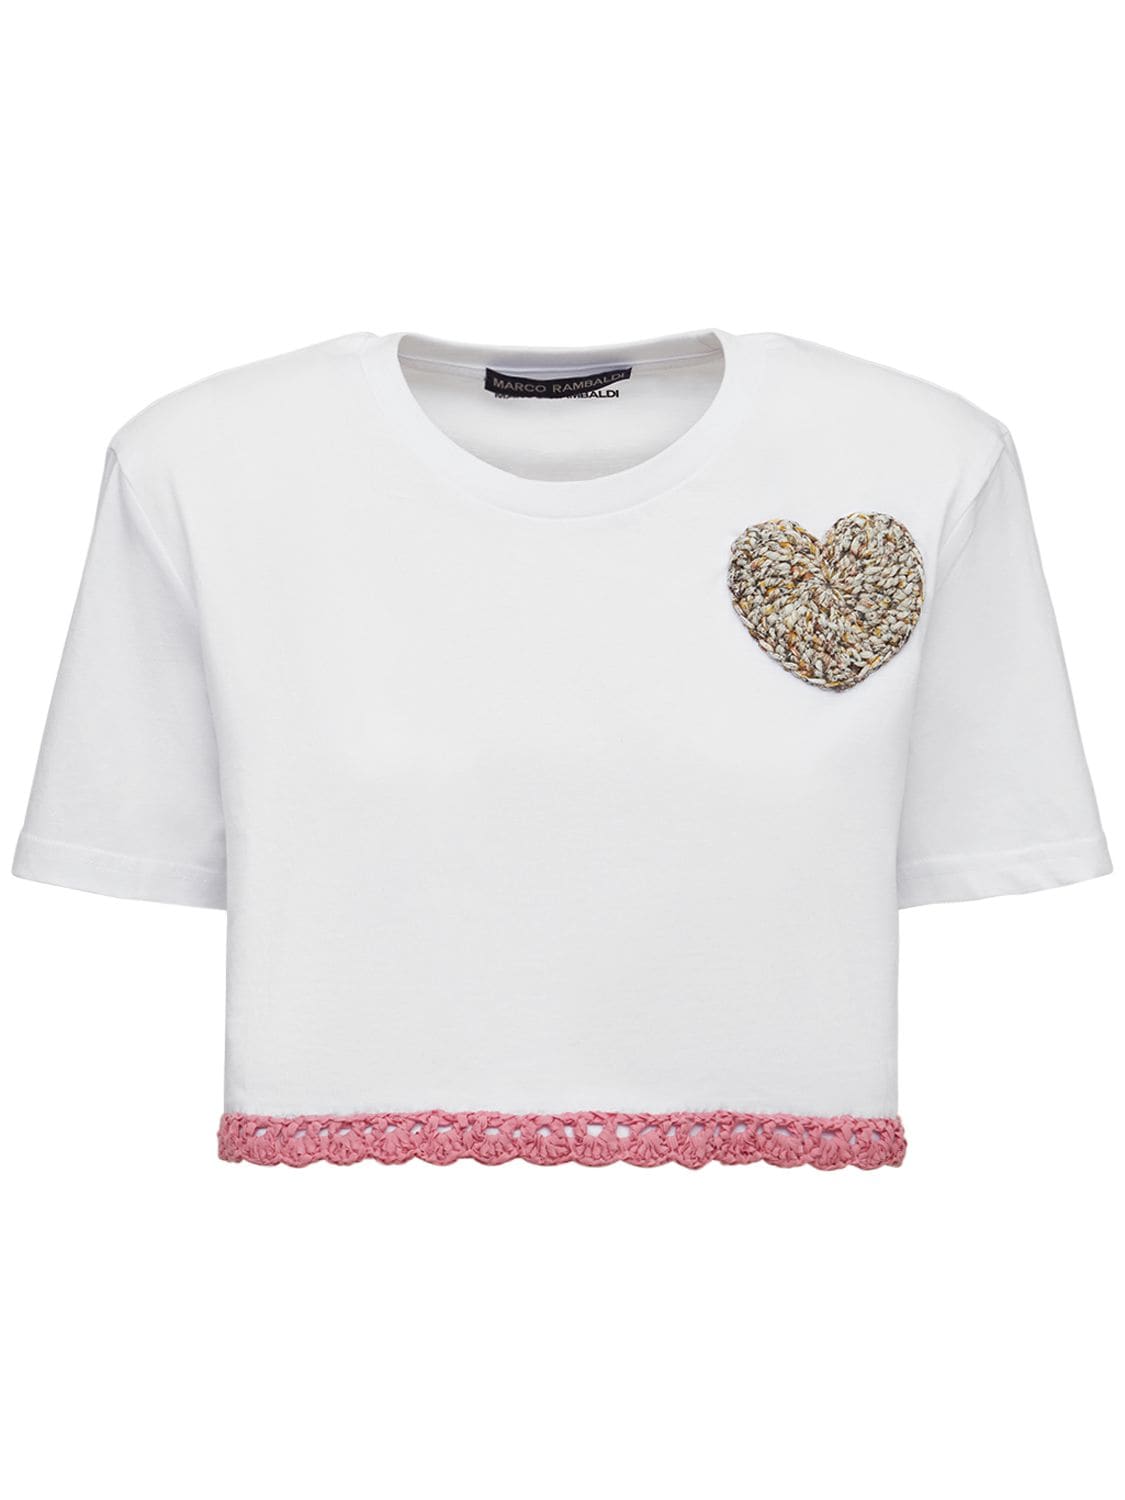 MARCO RAMBALDI Cotton Jersey Embroidered Heart T-shirt